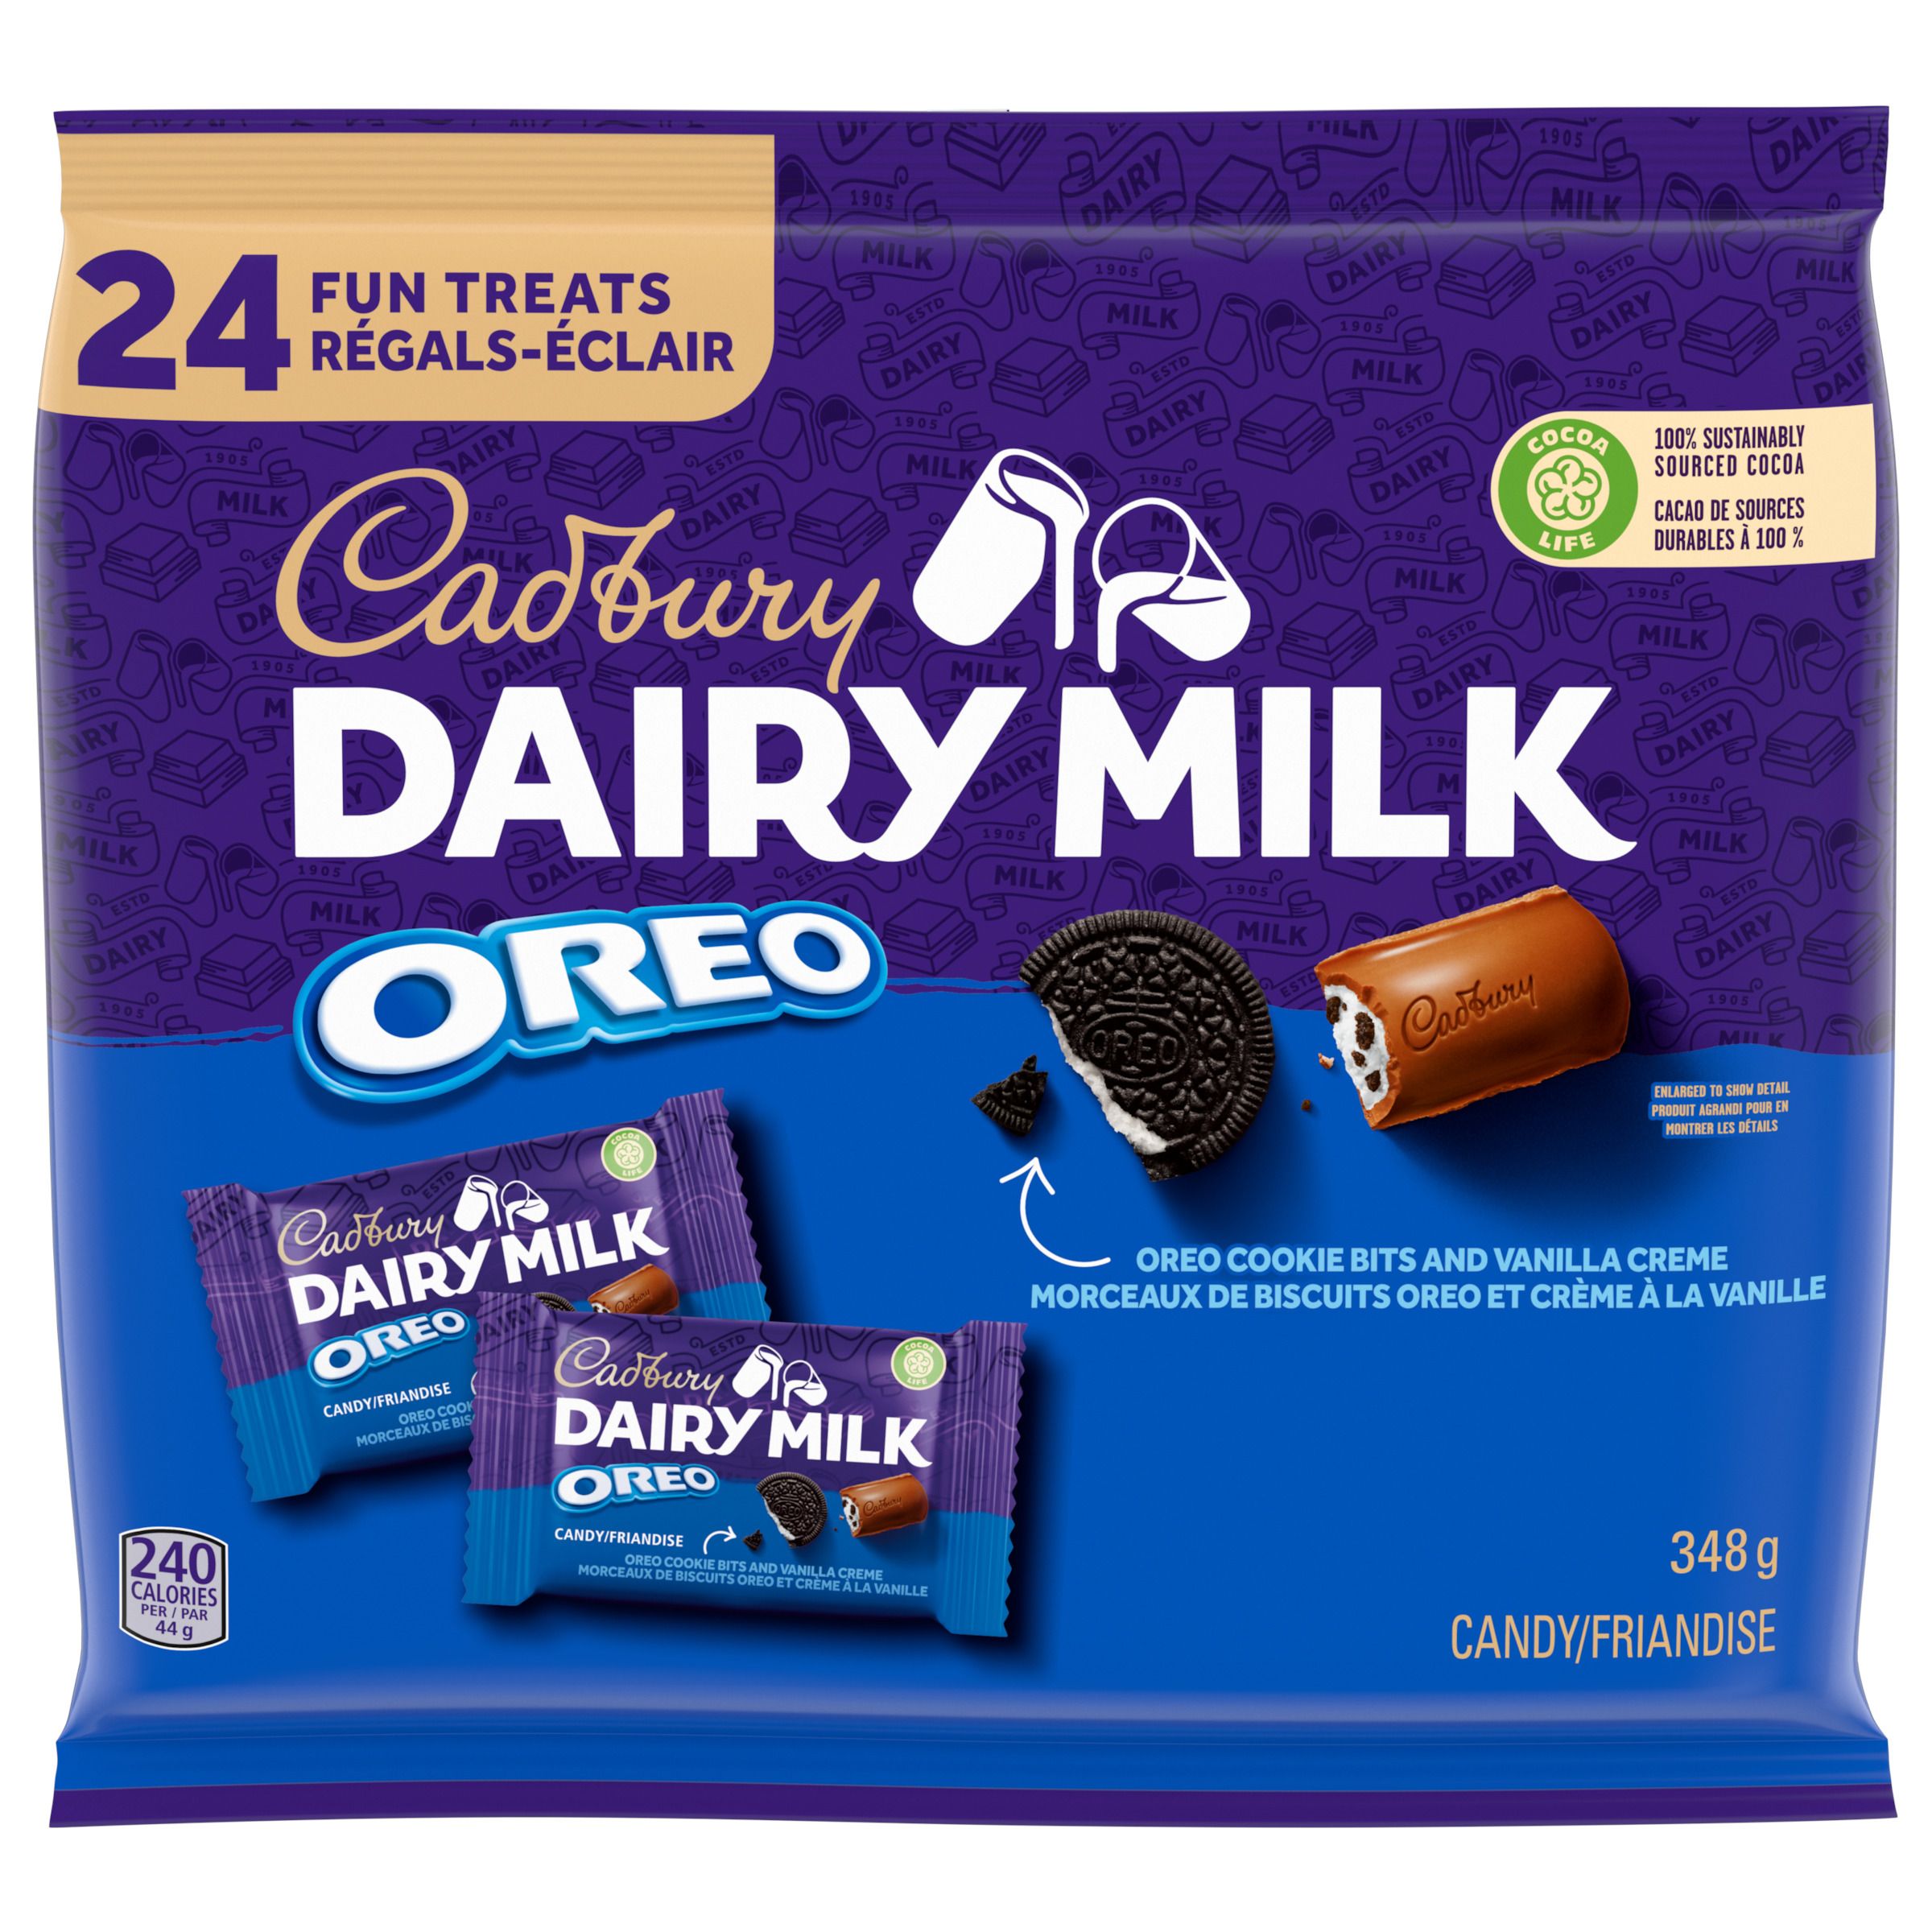 Cadbury Dairy Milk Oreo Fun Treats Candy Bar (348 g)